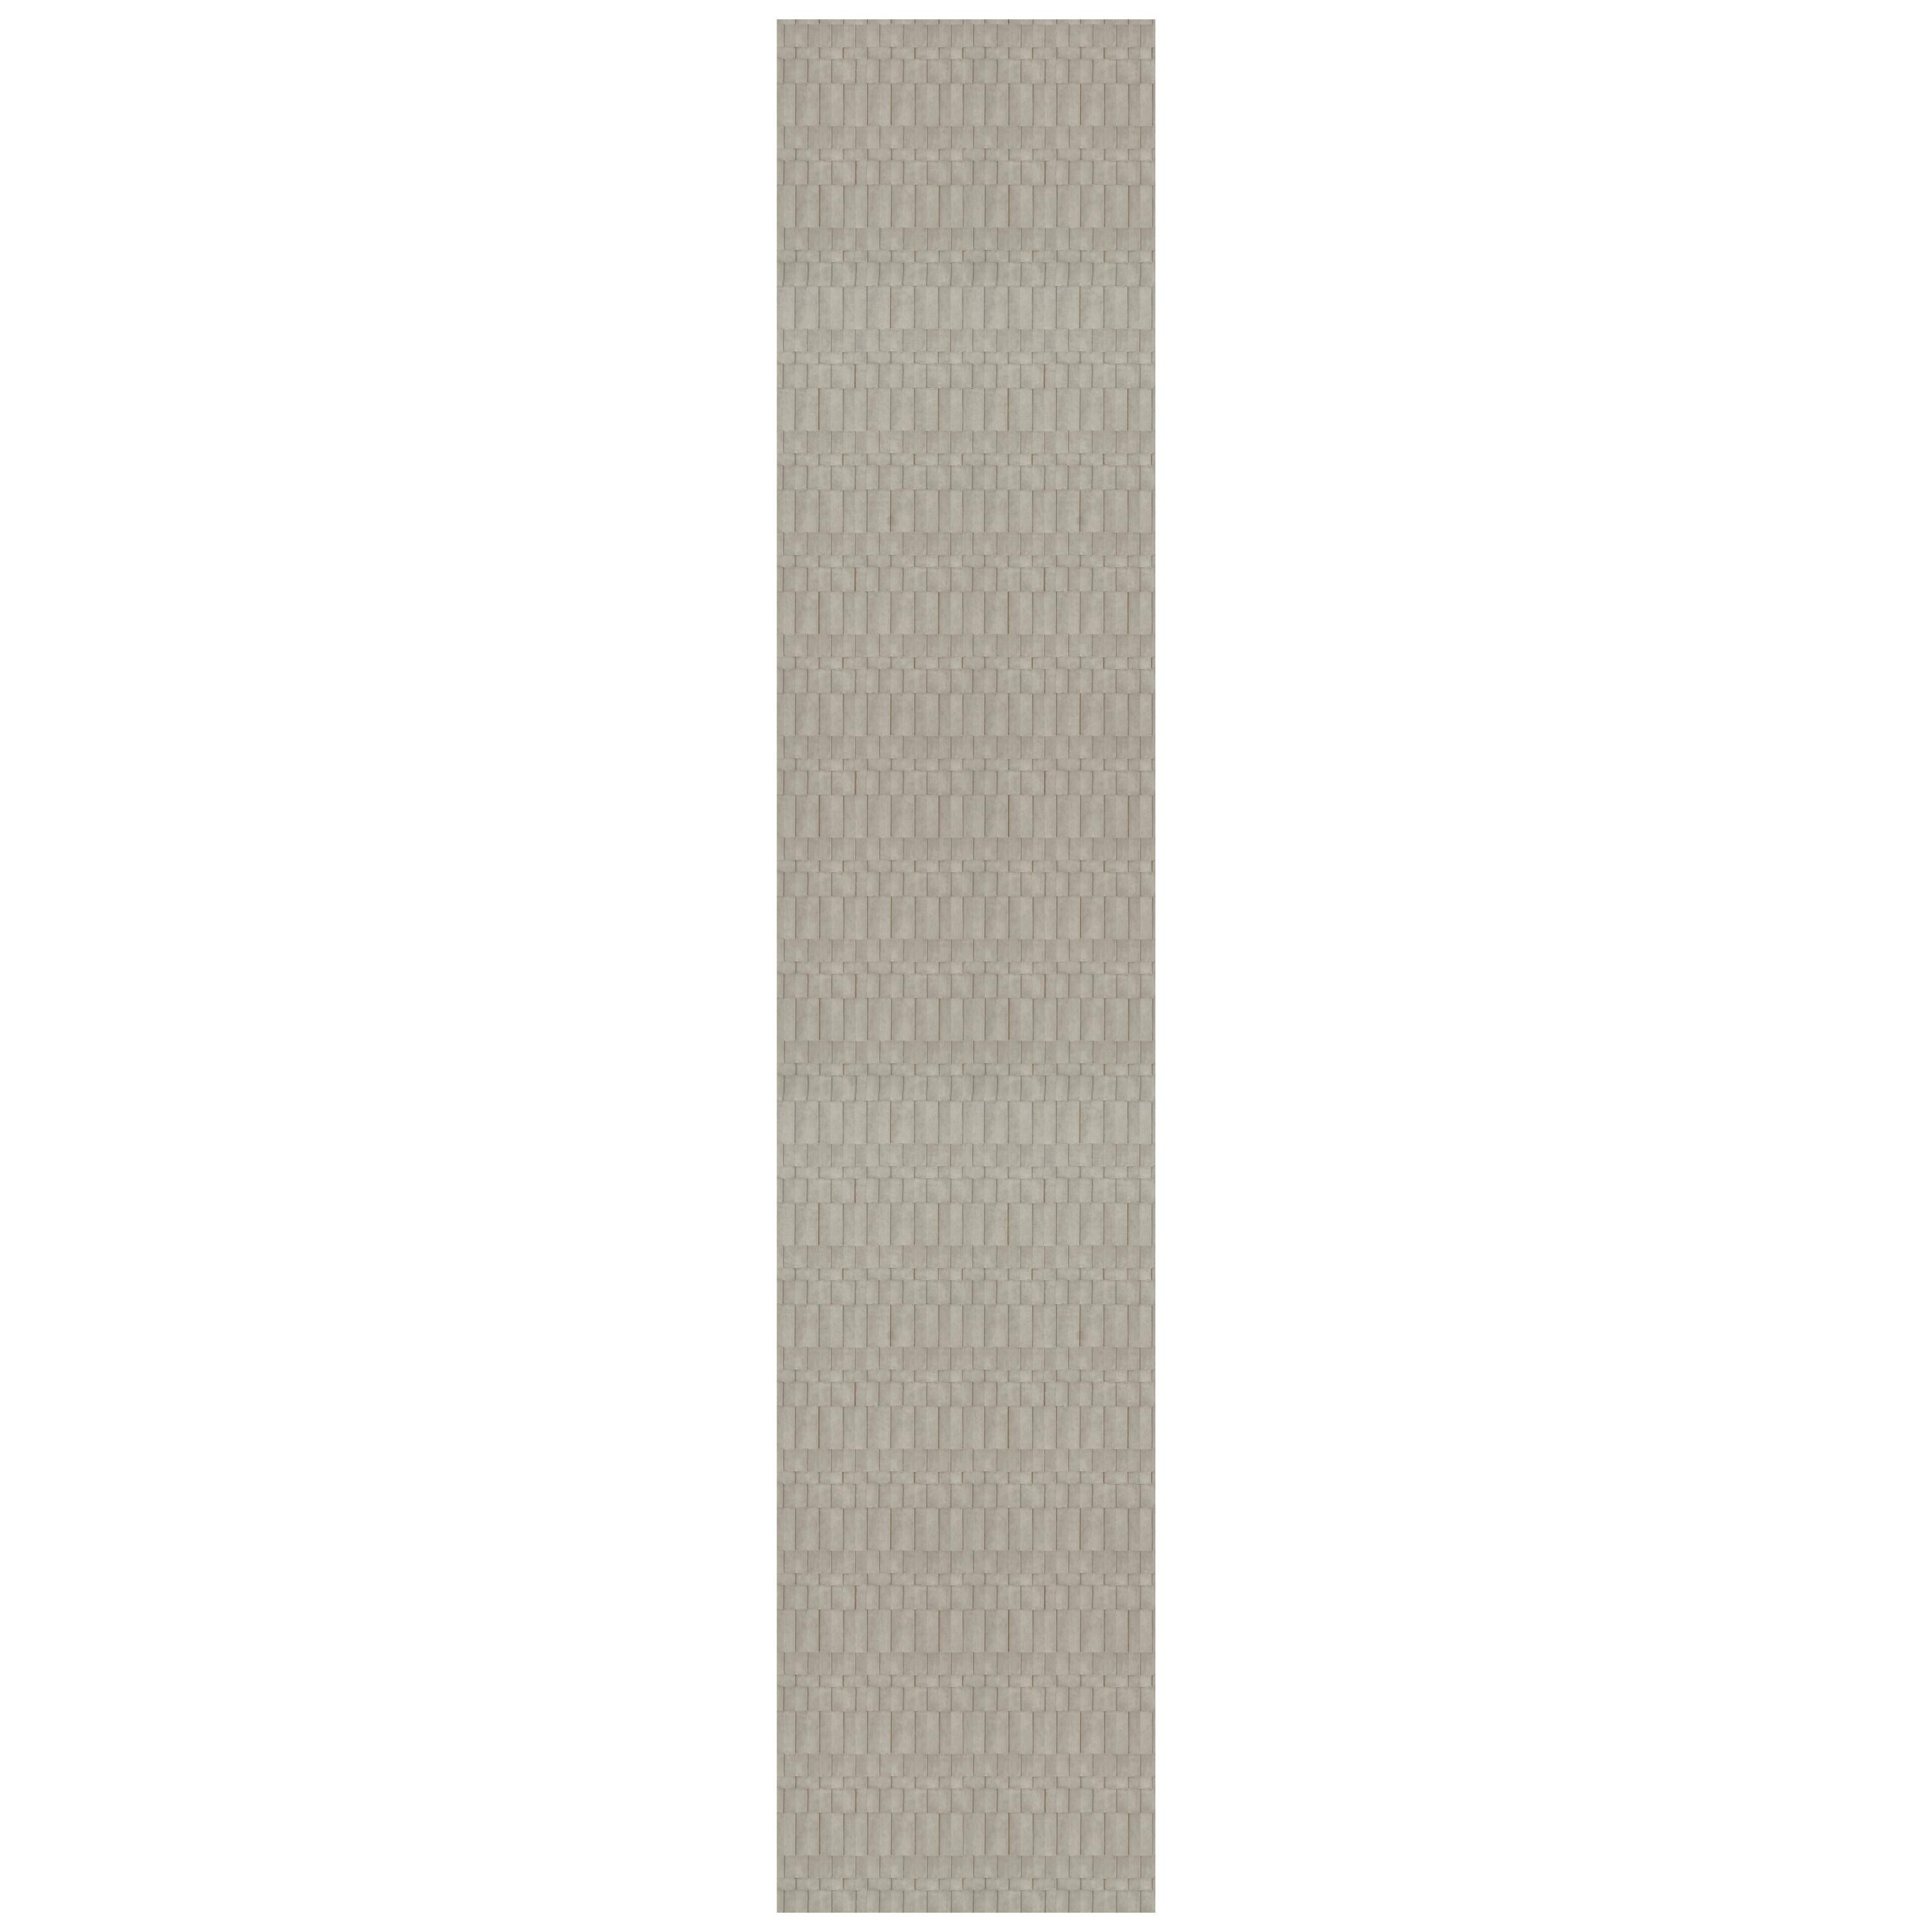 Wall&decò Essential Wallpaper "Nori" 19110EWC grey with gold inlays 